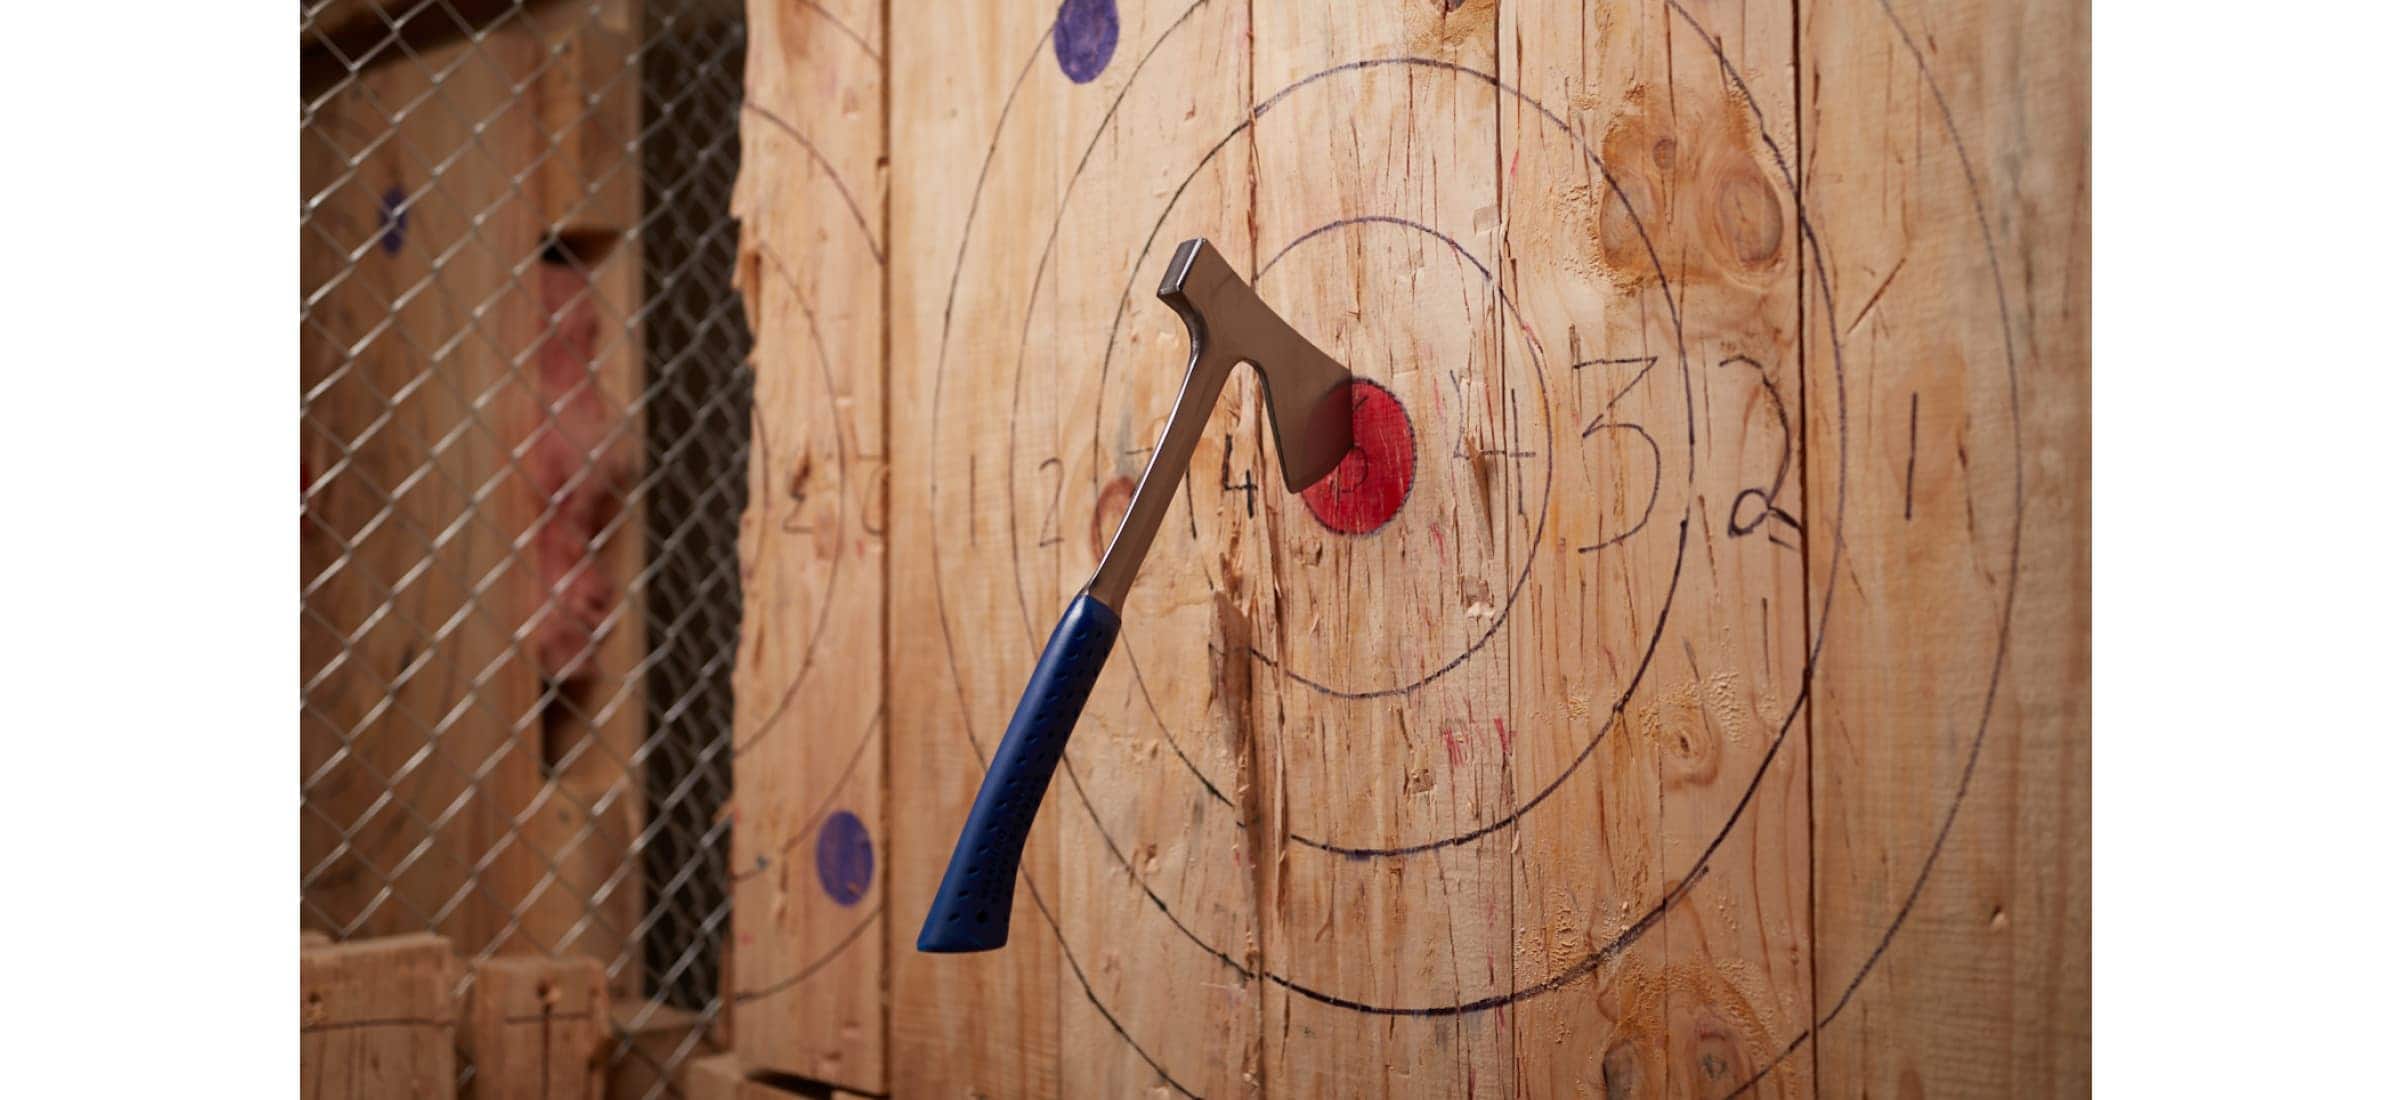 An axe embedded in the bullseye of a target.